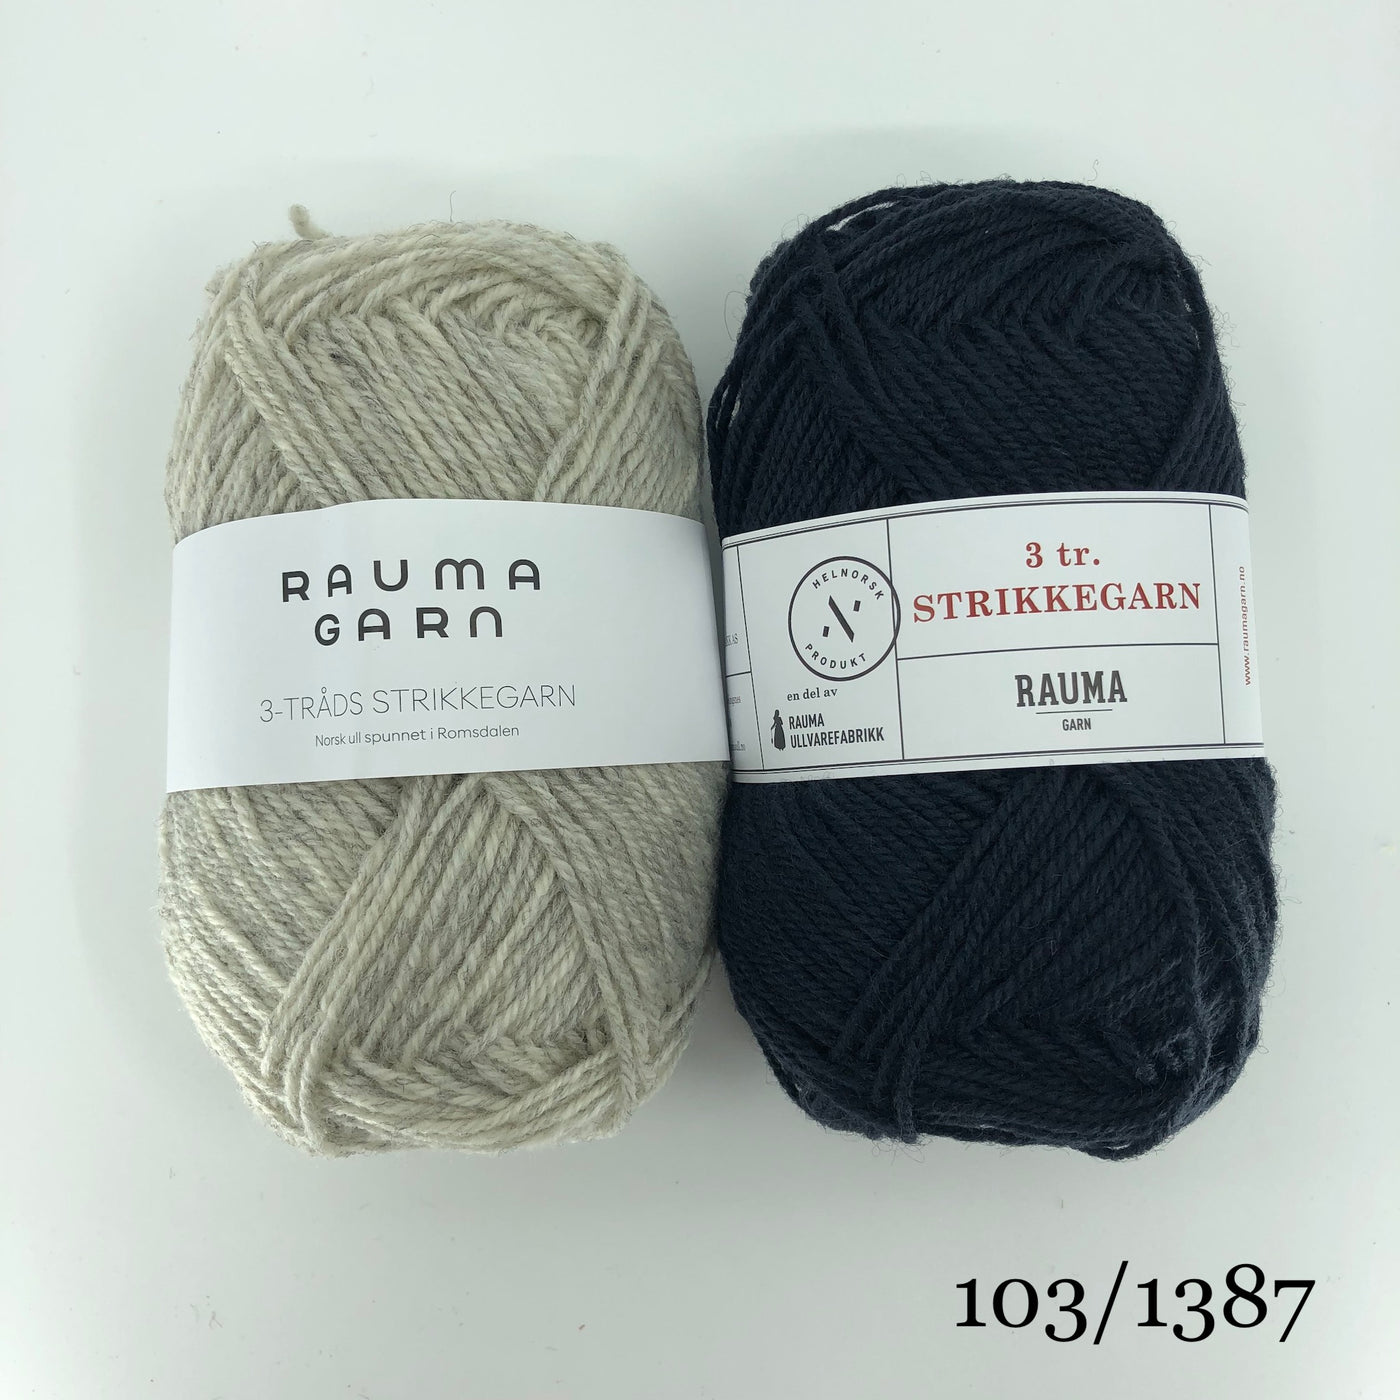 The Woolly Thistle Bladjakke Cardigan 288-1 in Rauma Strikkegarn and 2 balls of yarn in beige and black.